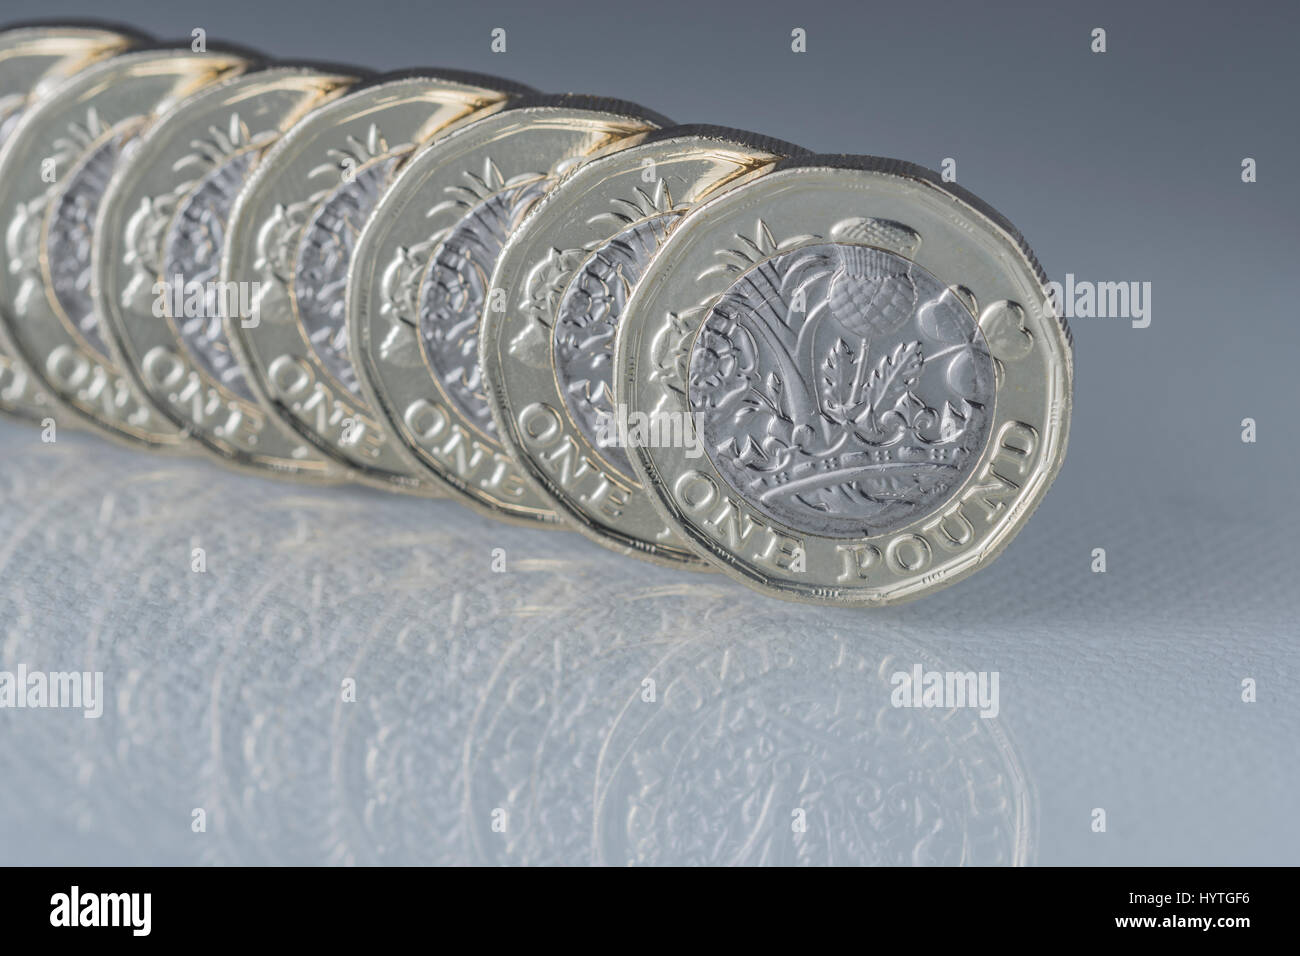 New £1 / One Pound coin / UK British Pound Coin. Stock Photo